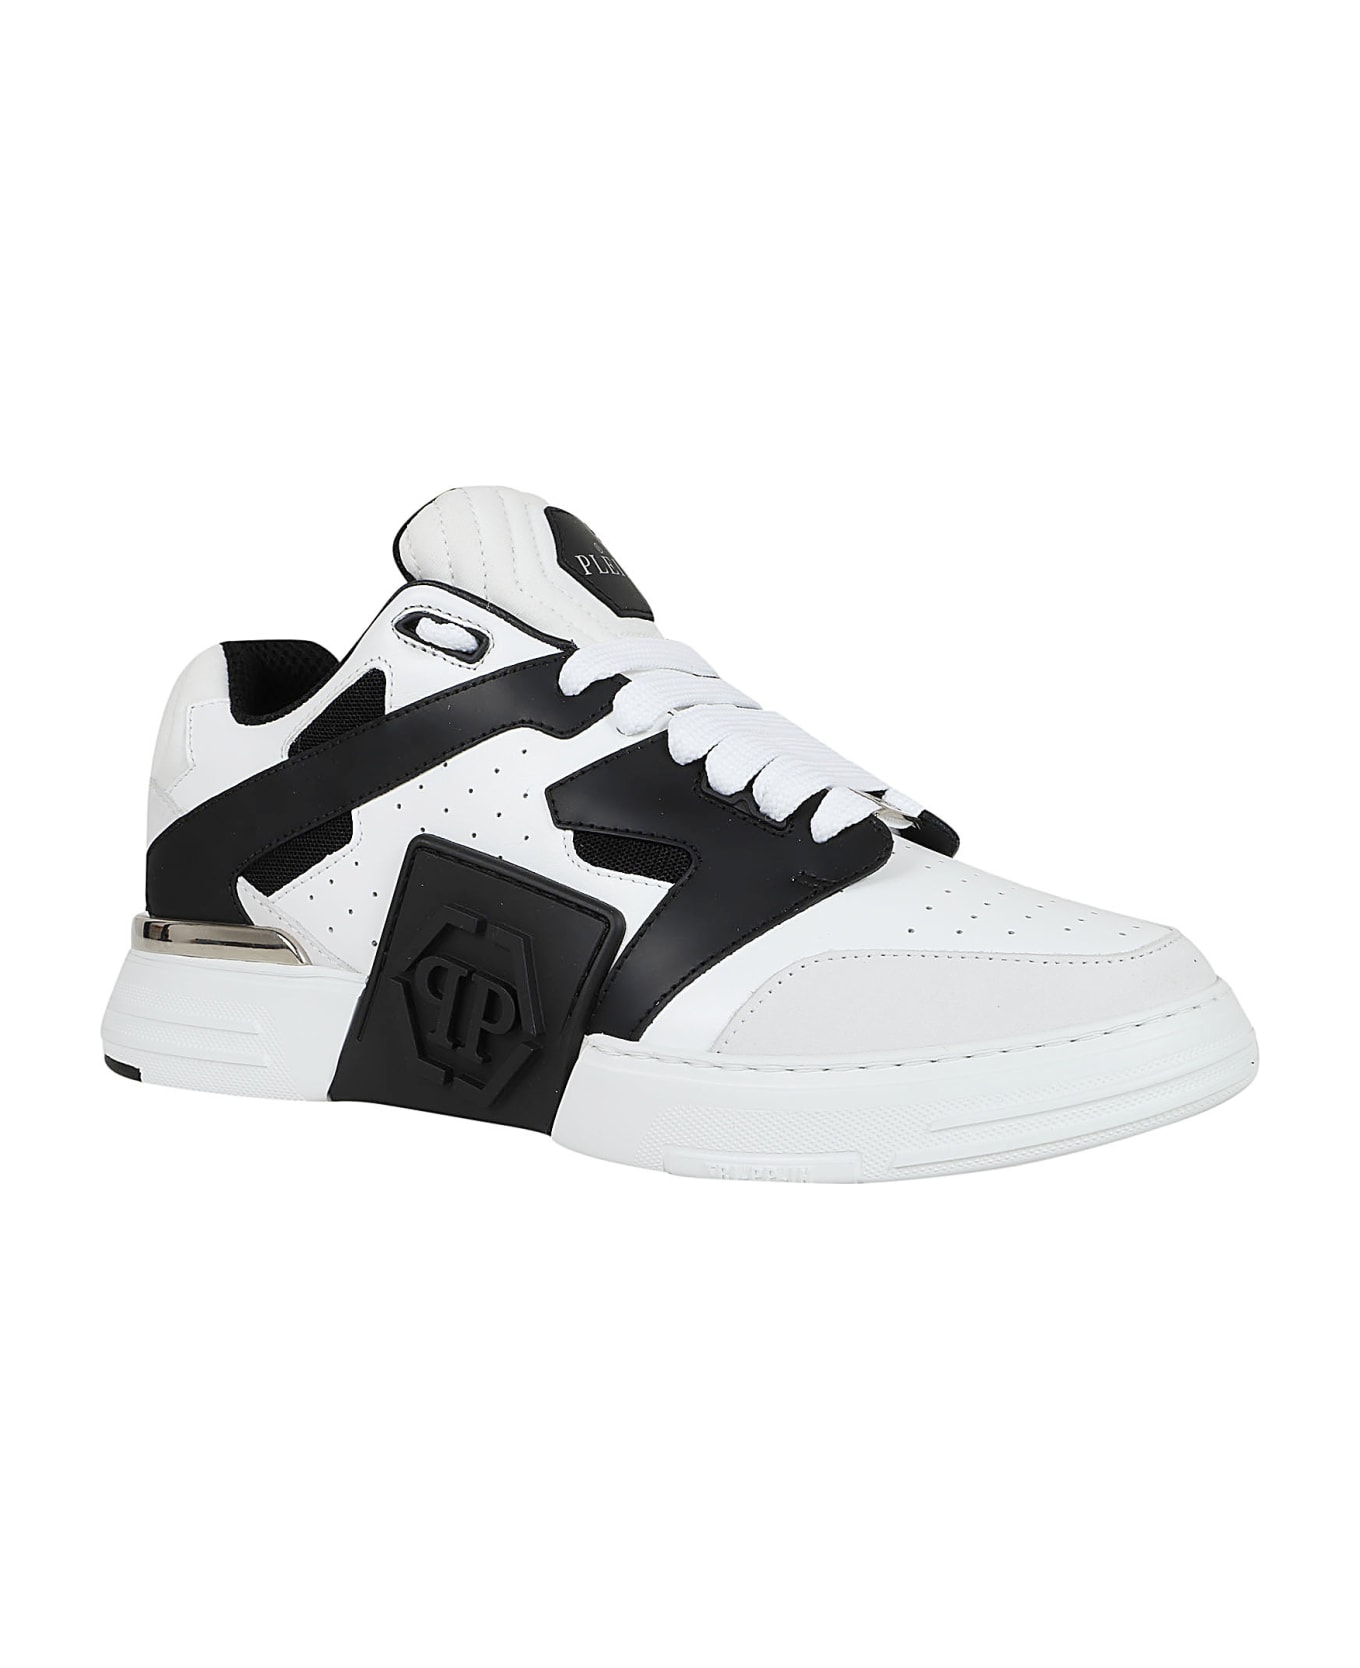 Philipp Plein Mix Leather Lo-top Sneakers - White Black スニーカー